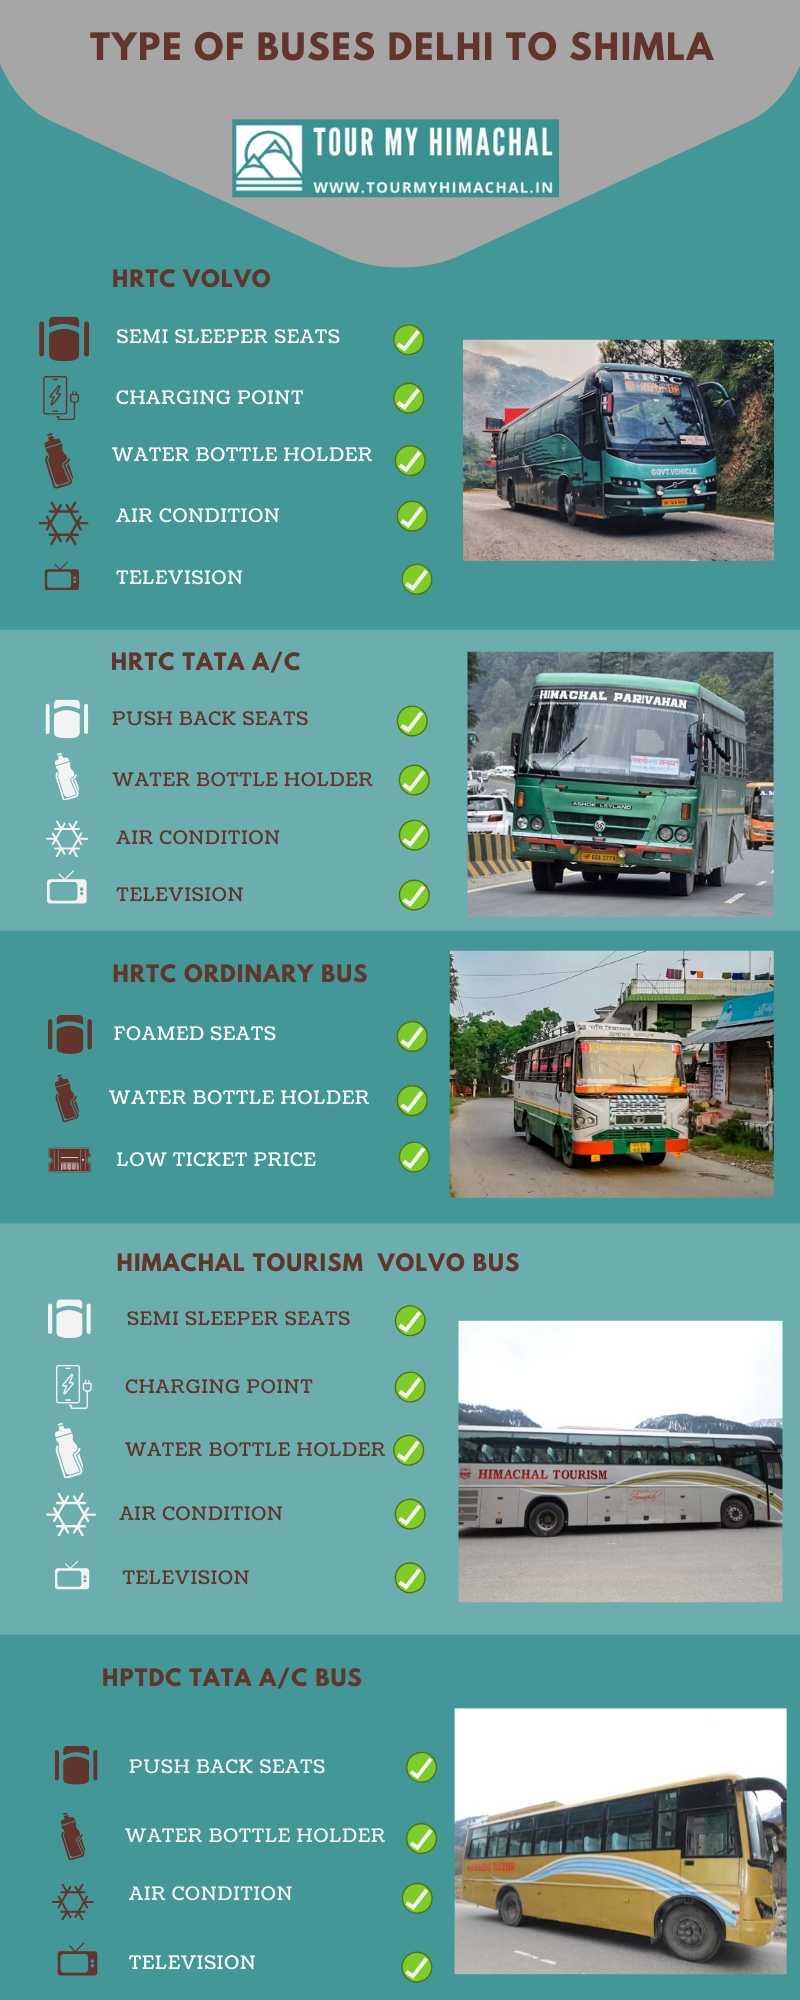 Delhi to Shimla bus types